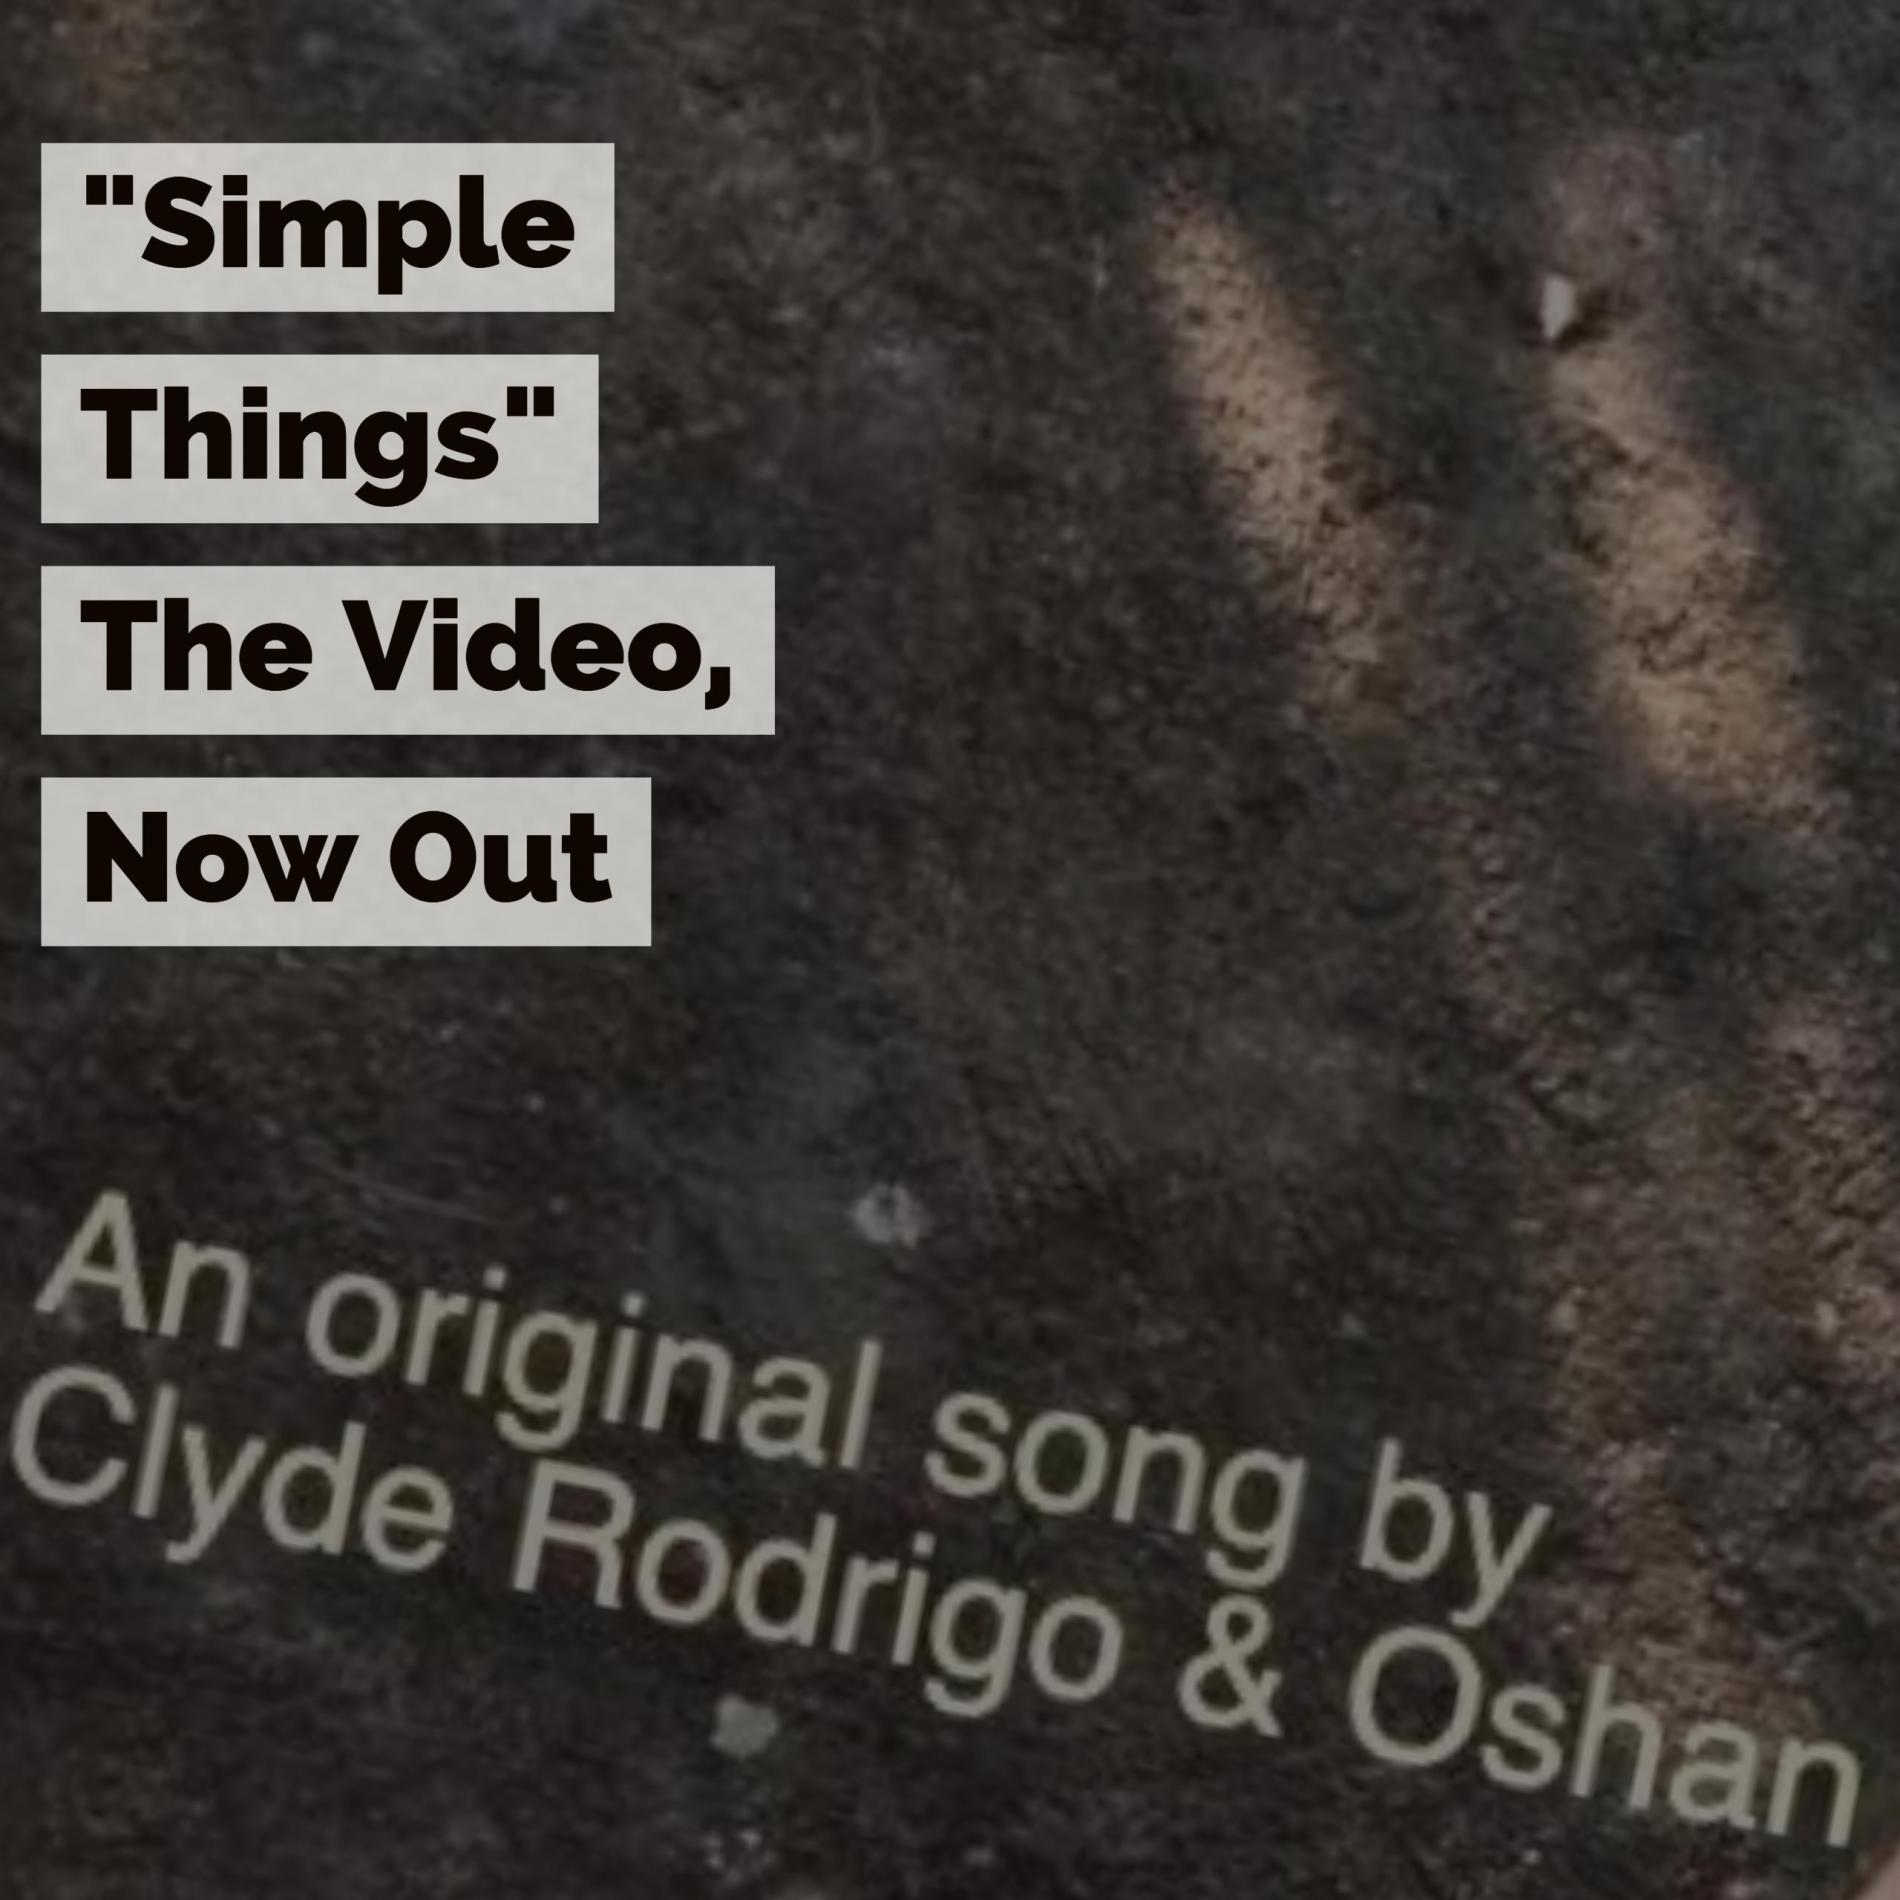 Clyde Rodrigo & Oshan Fernando – “Simple Things”